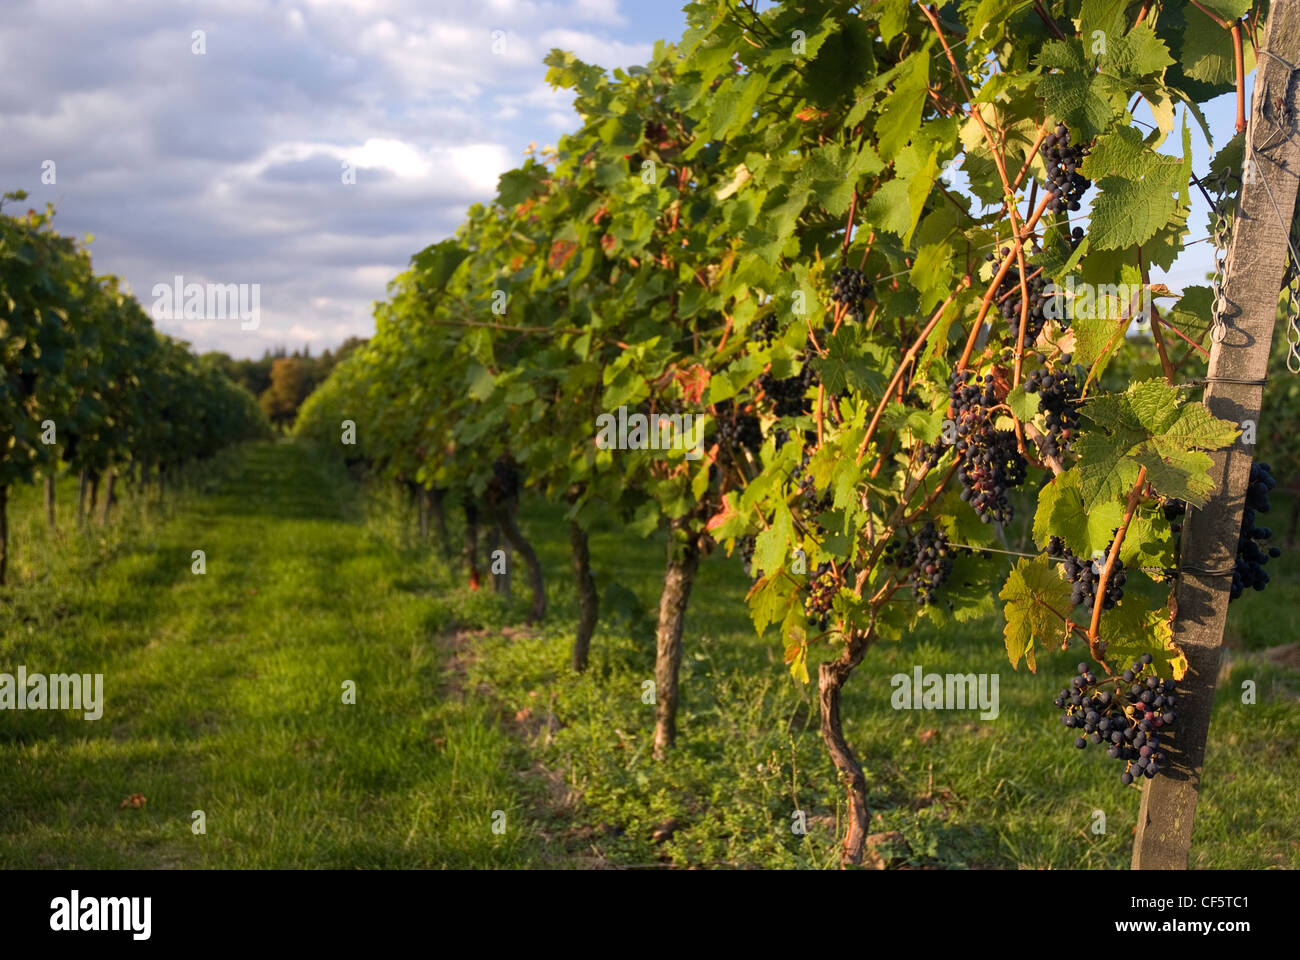 Merlot grapes growing at Denbies Vineyard. Stock Photo